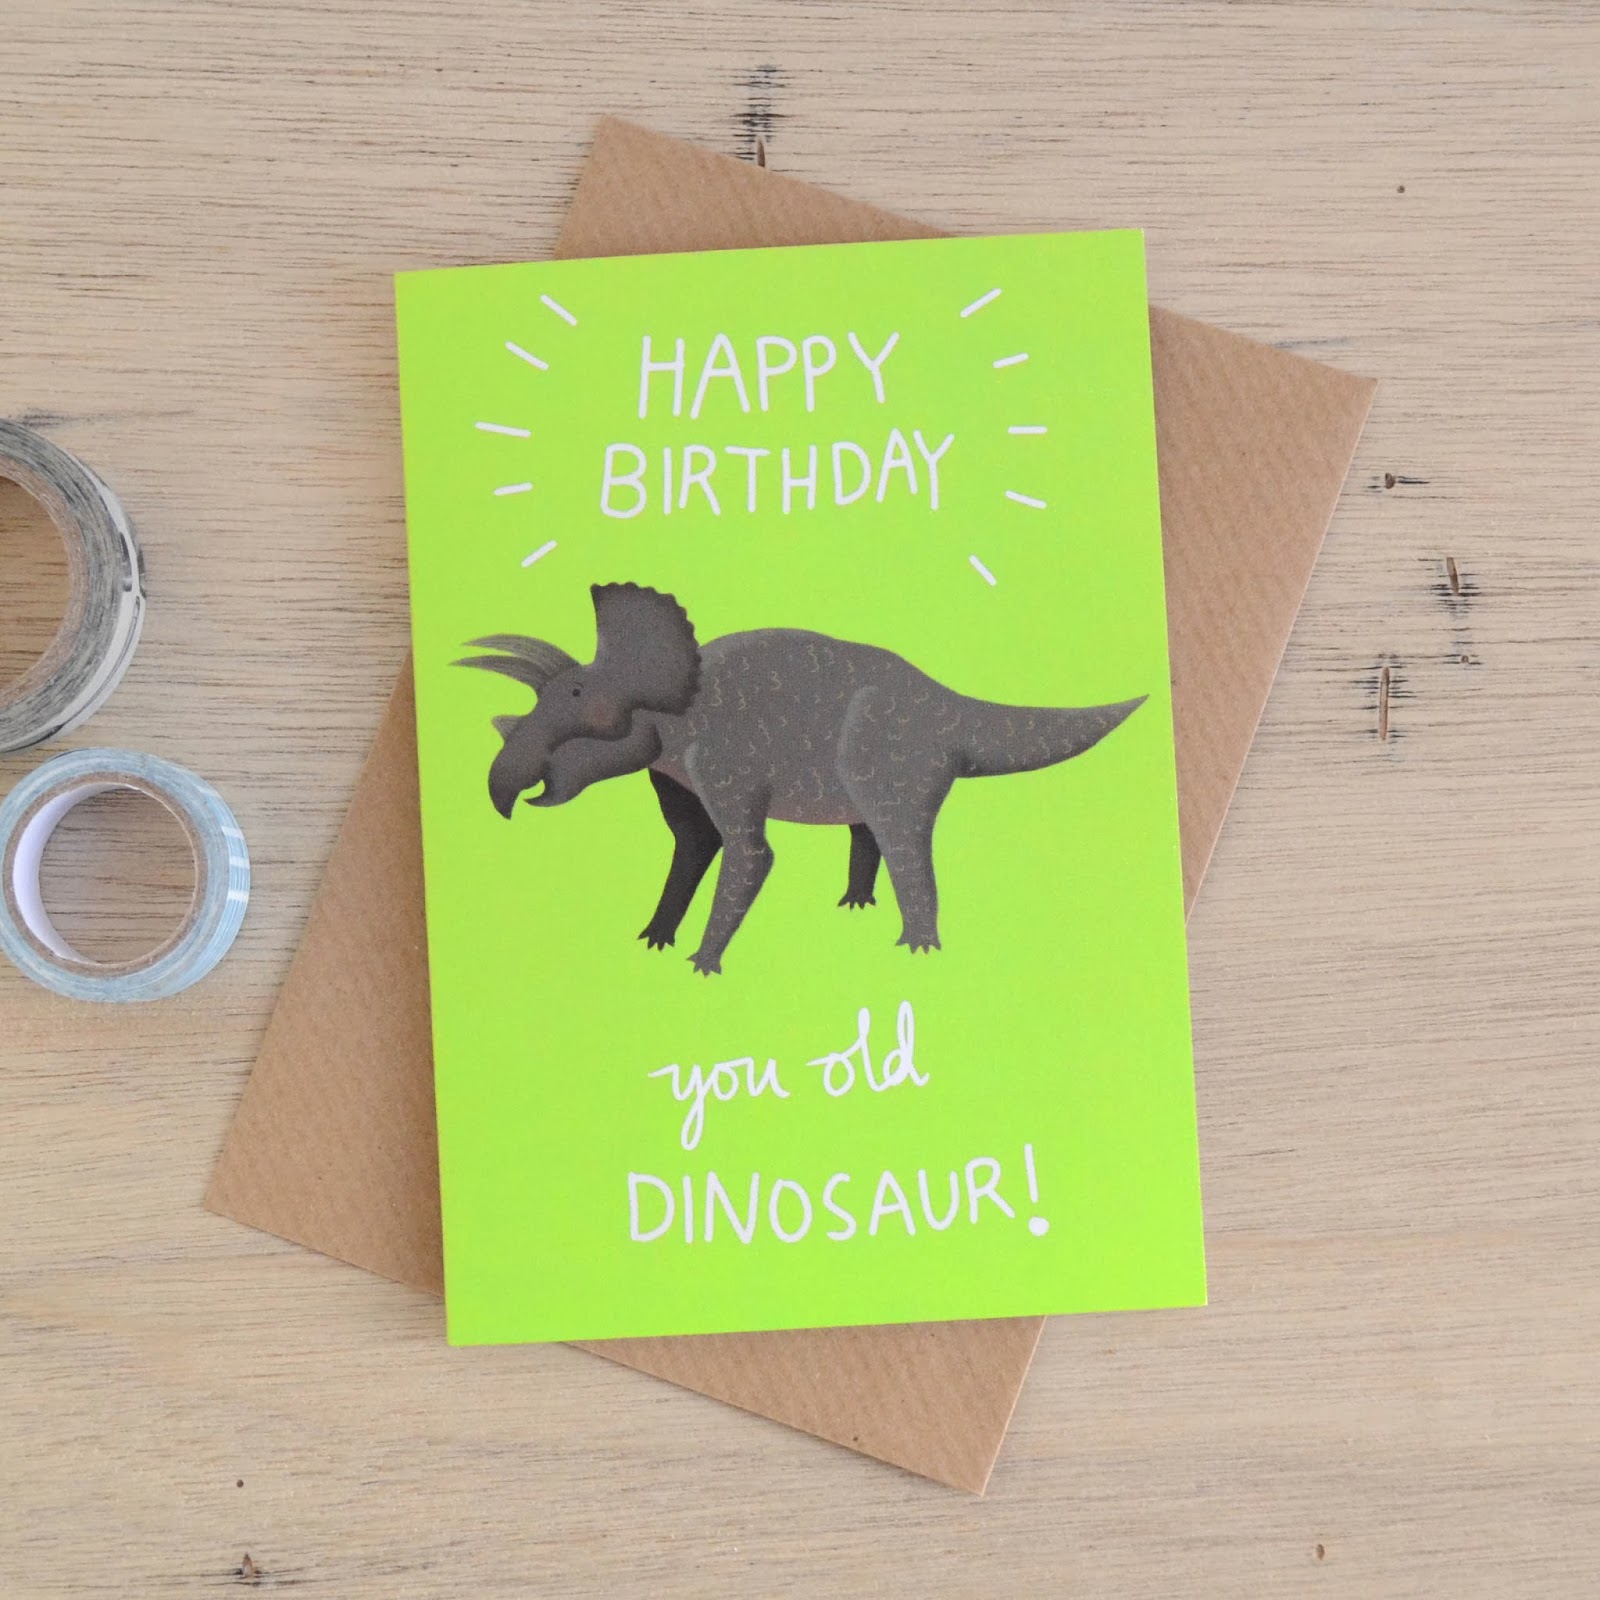 http://folksy.com/items/5725531-You-Old-Dinosaur-Birthday-Card